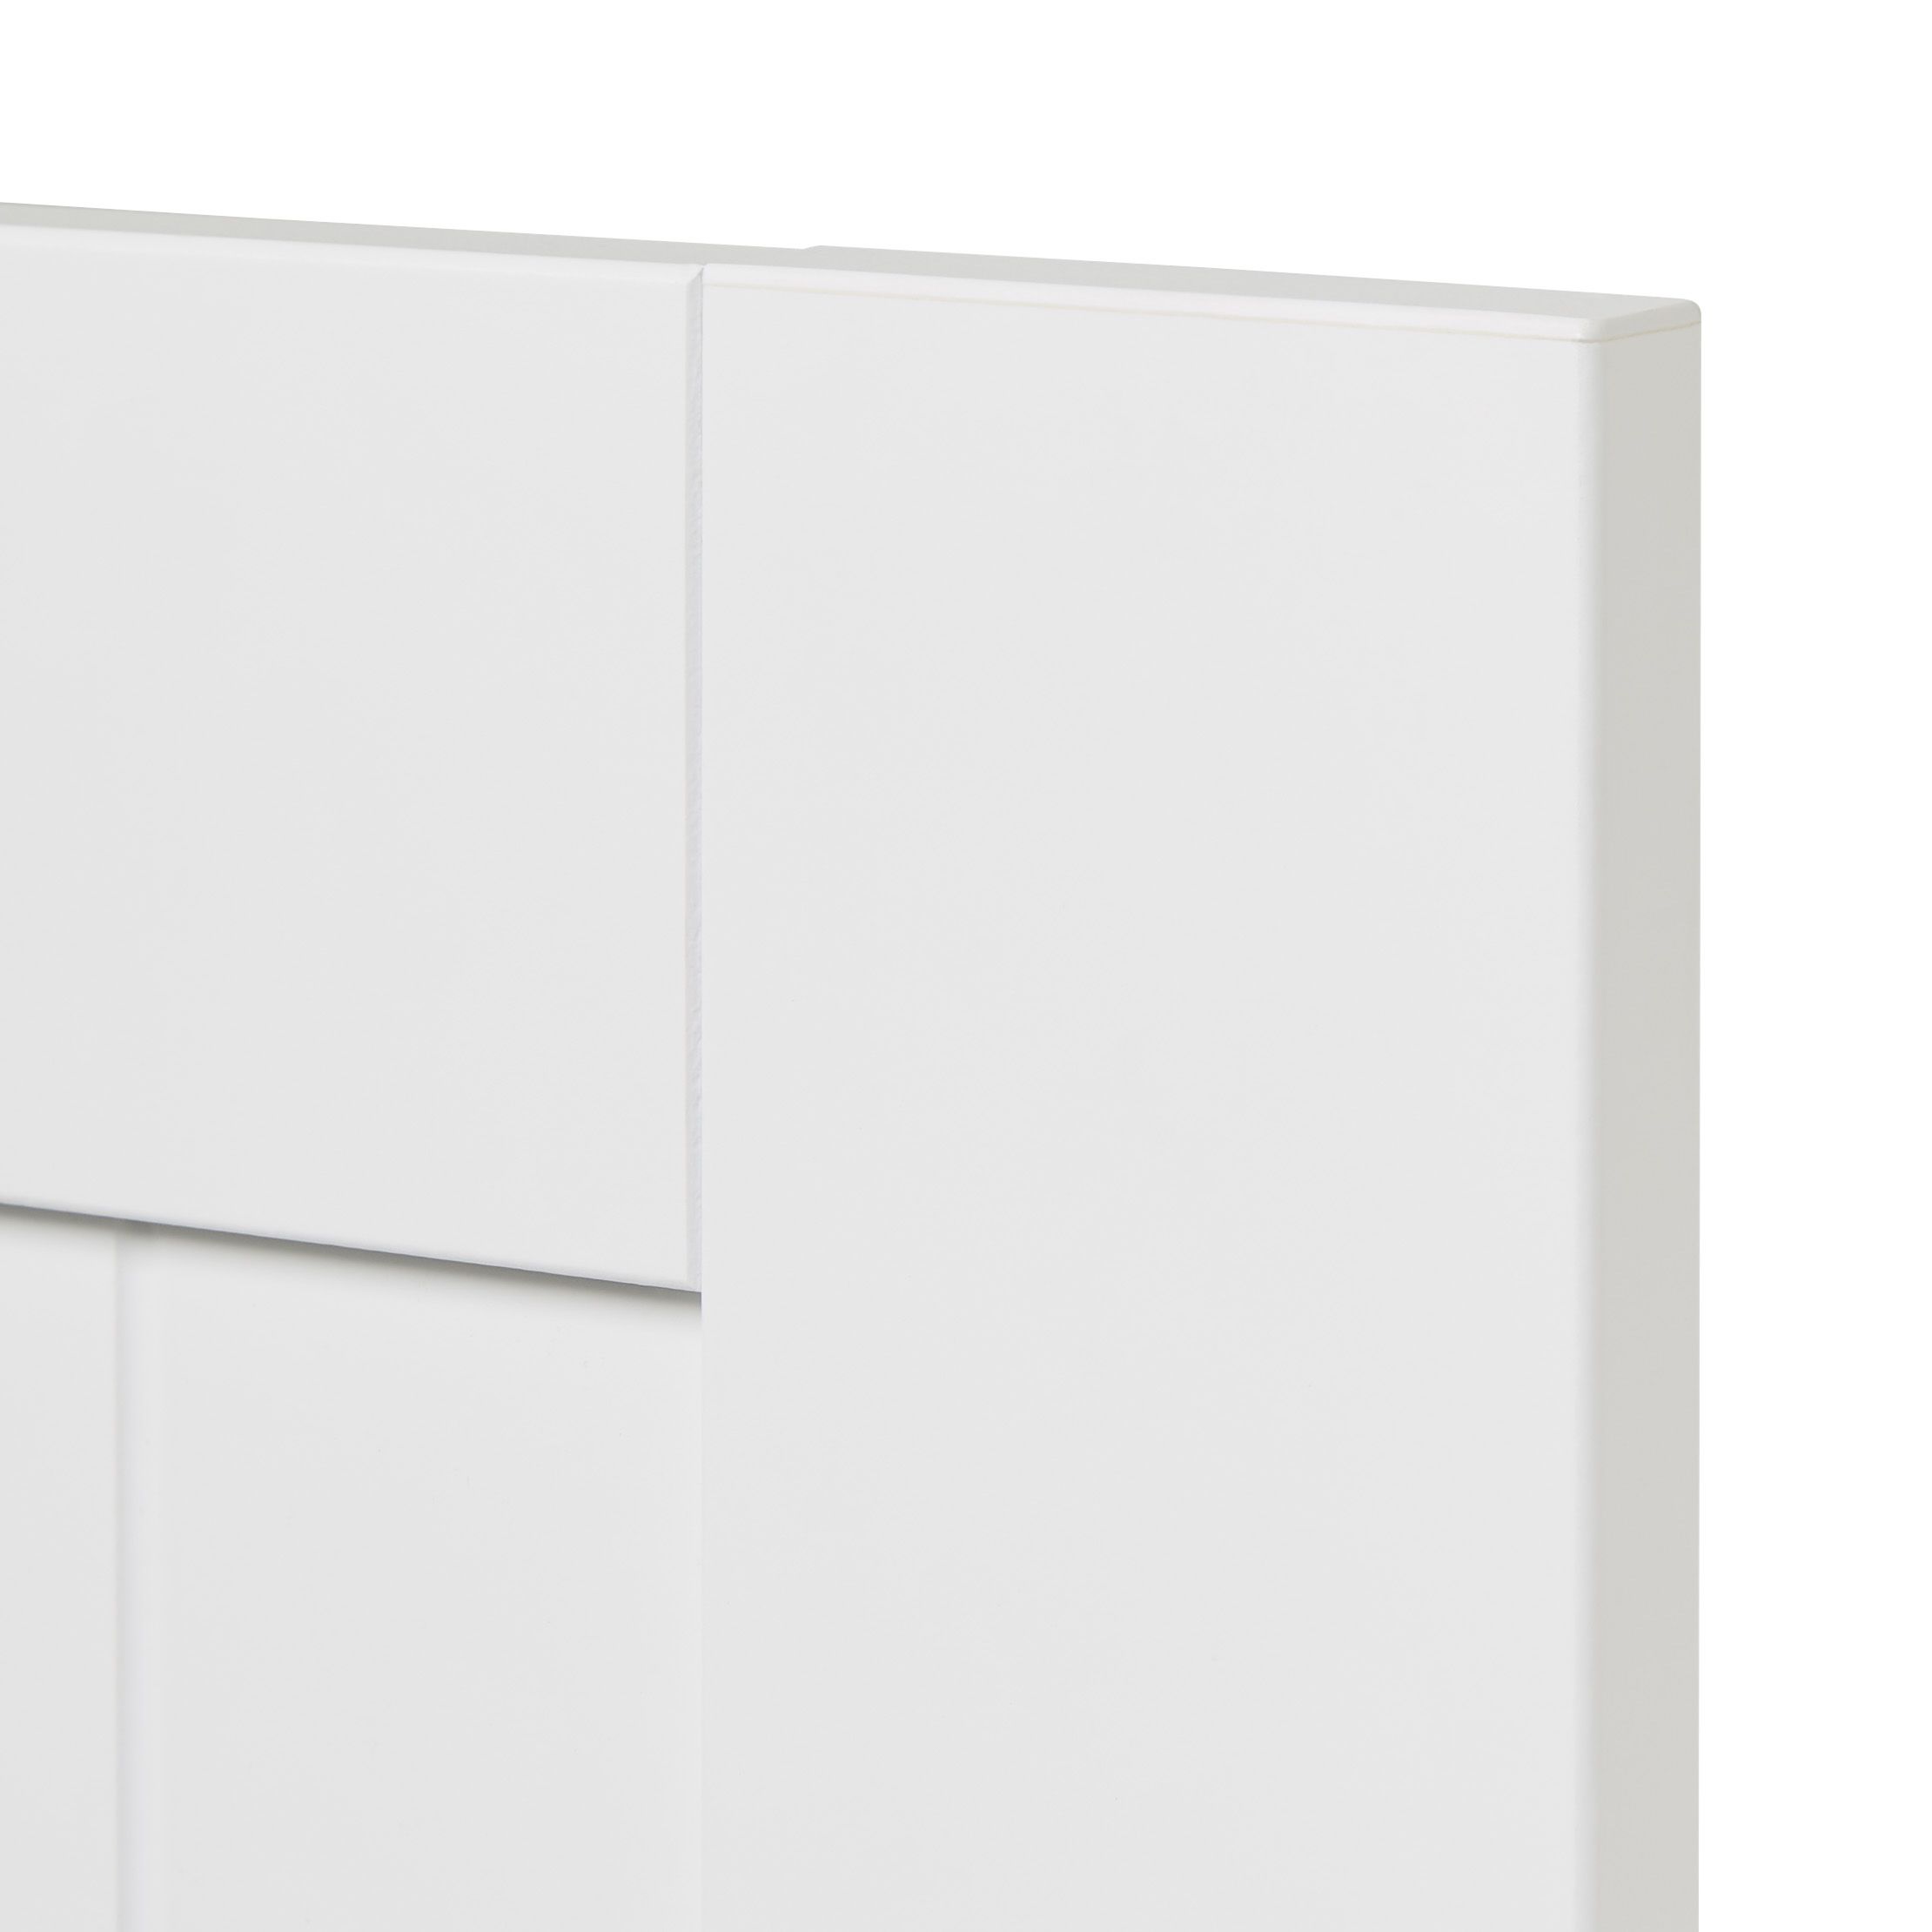 GoodHome Alpinia Matt white tongue & groove shaker Drawerline Cabinet door, (W)500mm (H)715mm (T)18mm